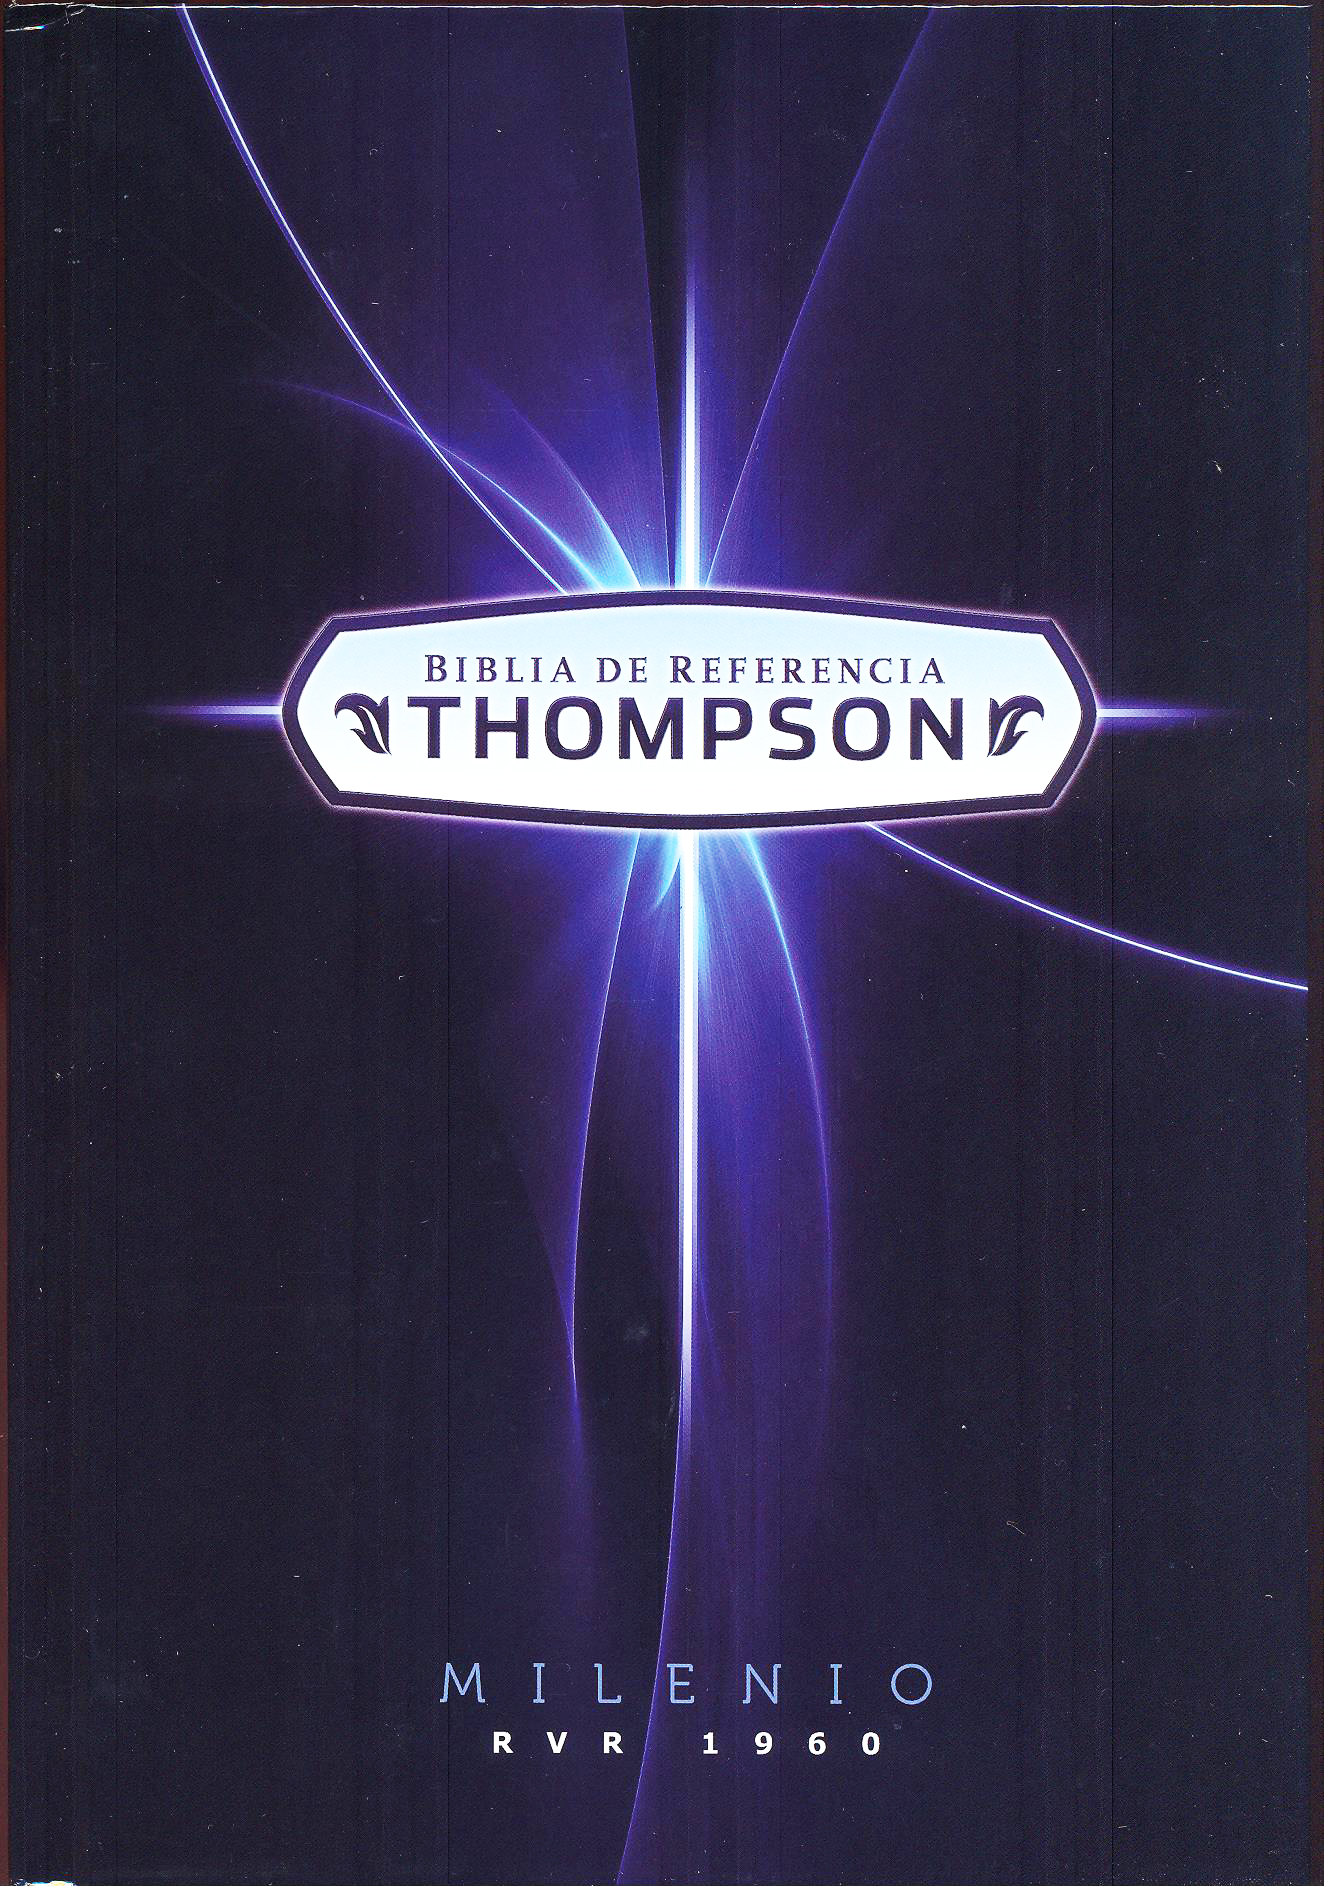 RVR60 Biblia de Referencia Thompson Milenio